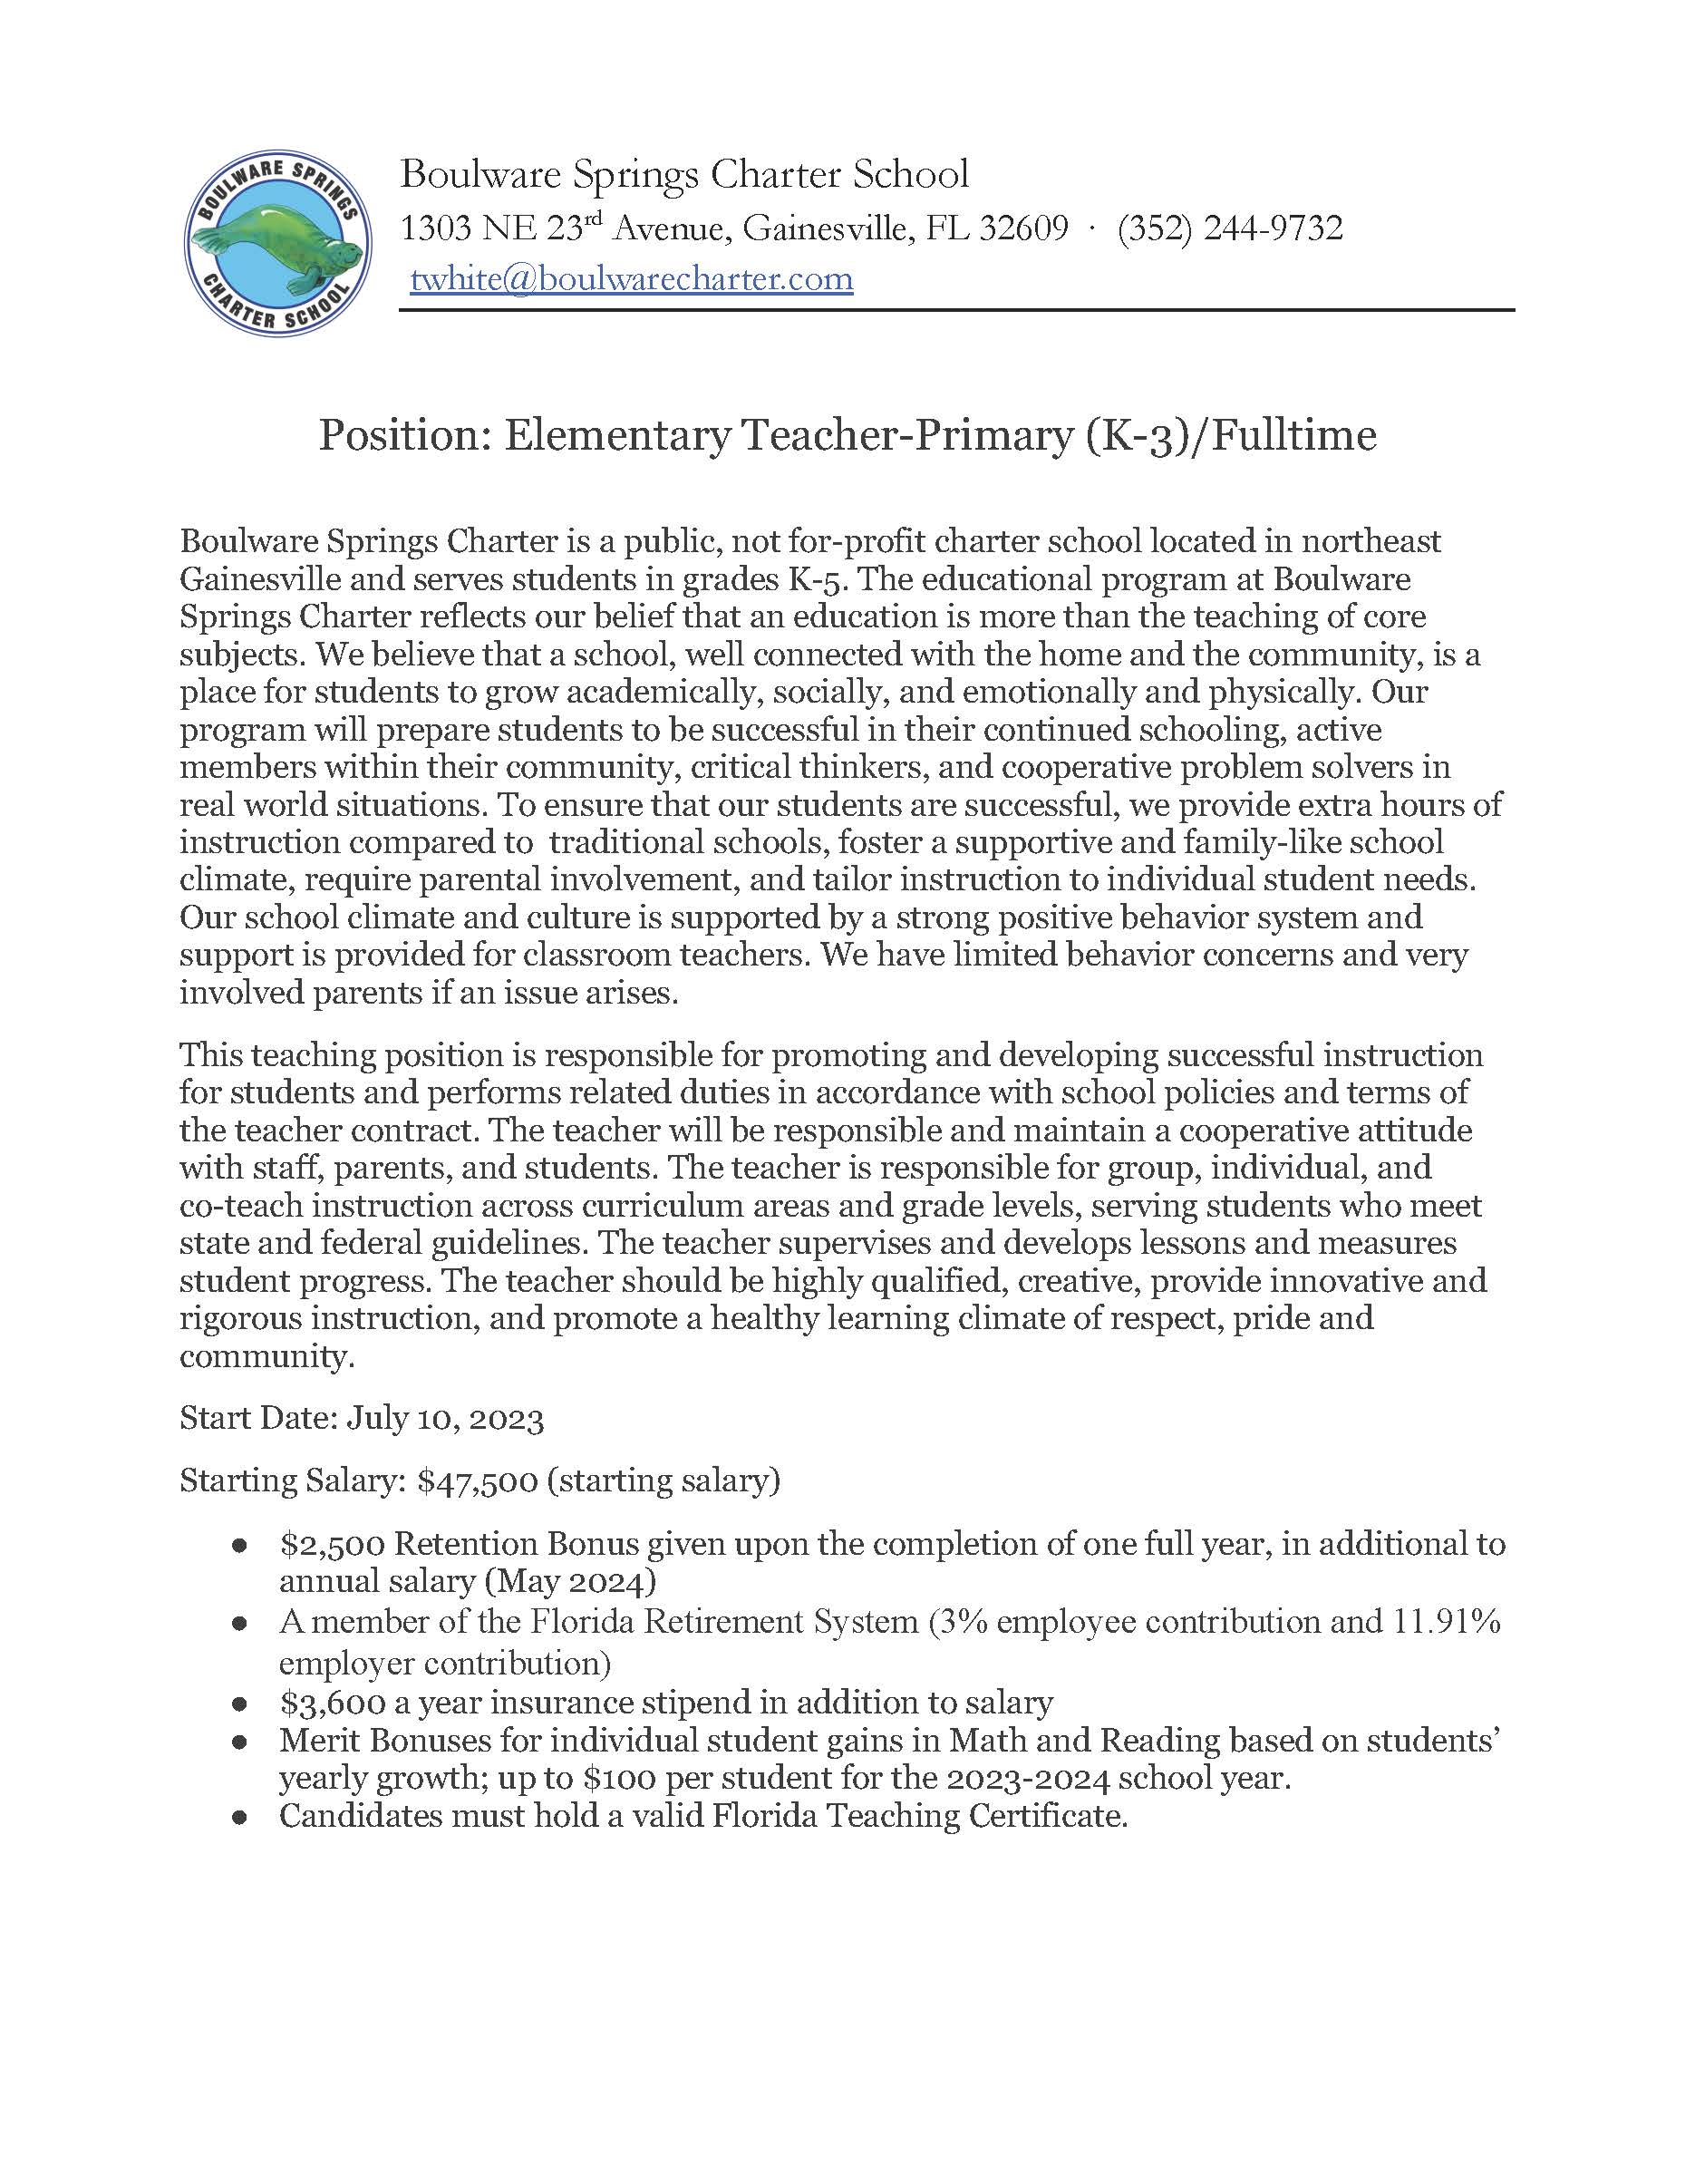 Elementary Teacher K 3 Job Description - Page 1